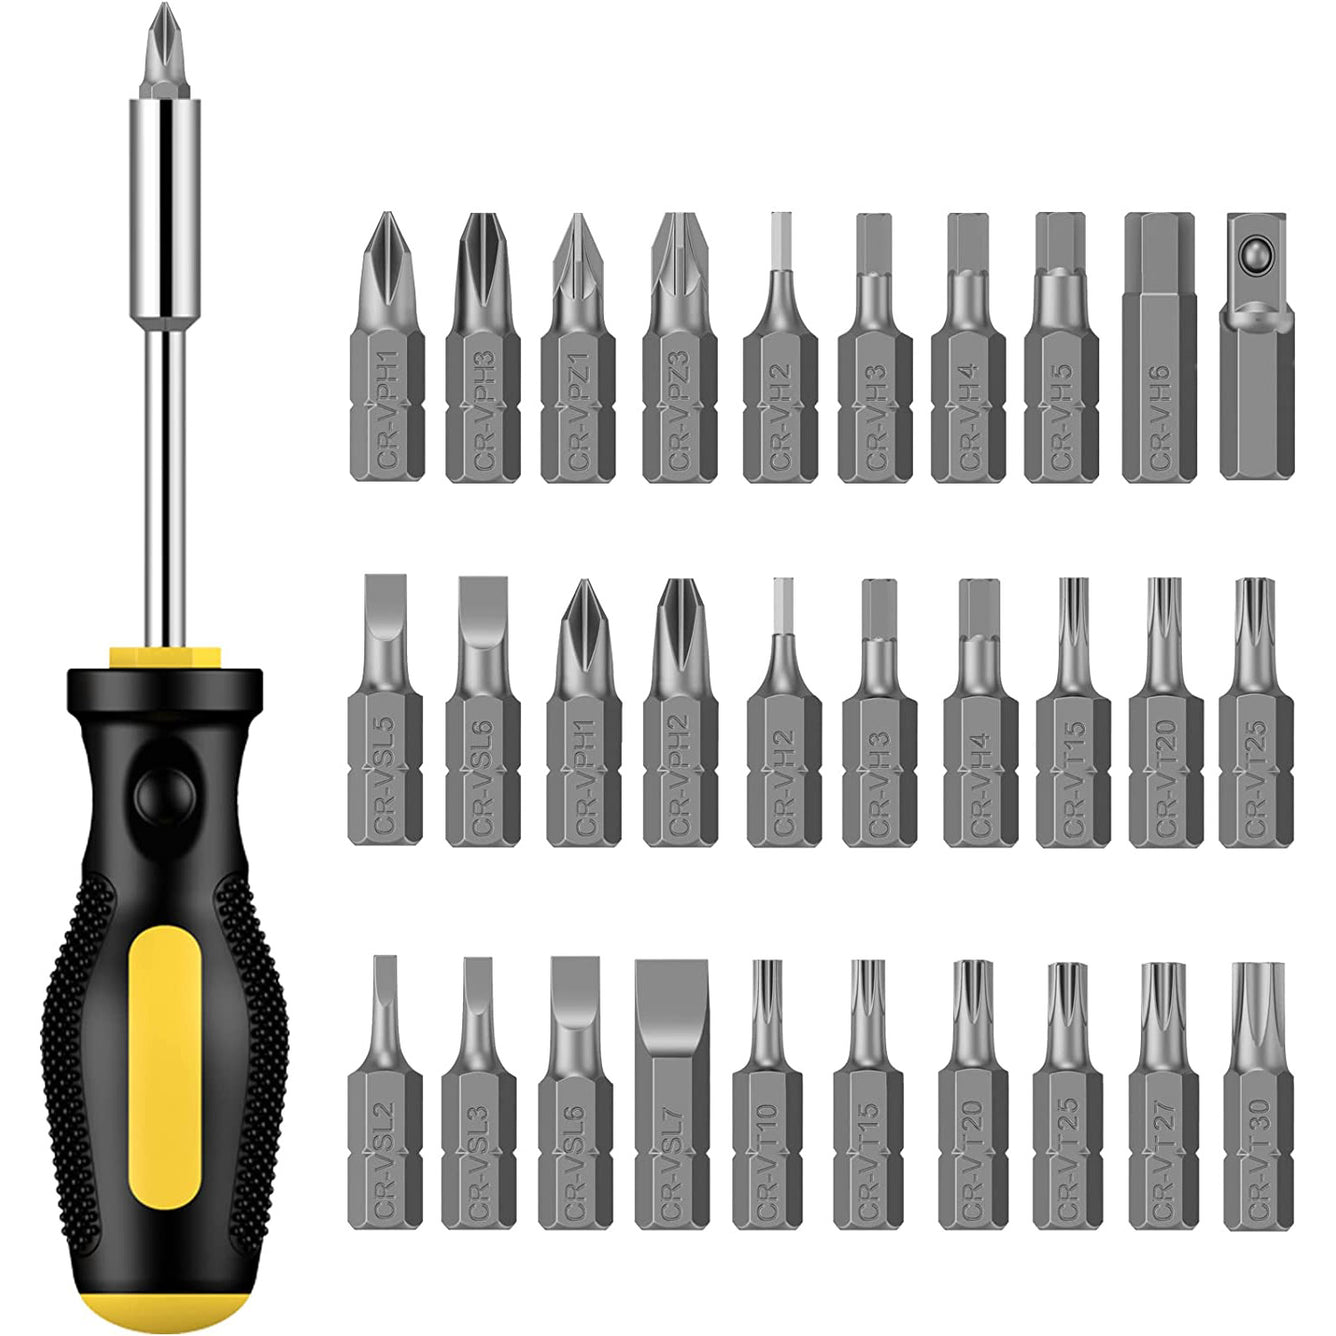 Proster Home Tool Kit 108 PCS Tool Set Household Hand Tool Kit